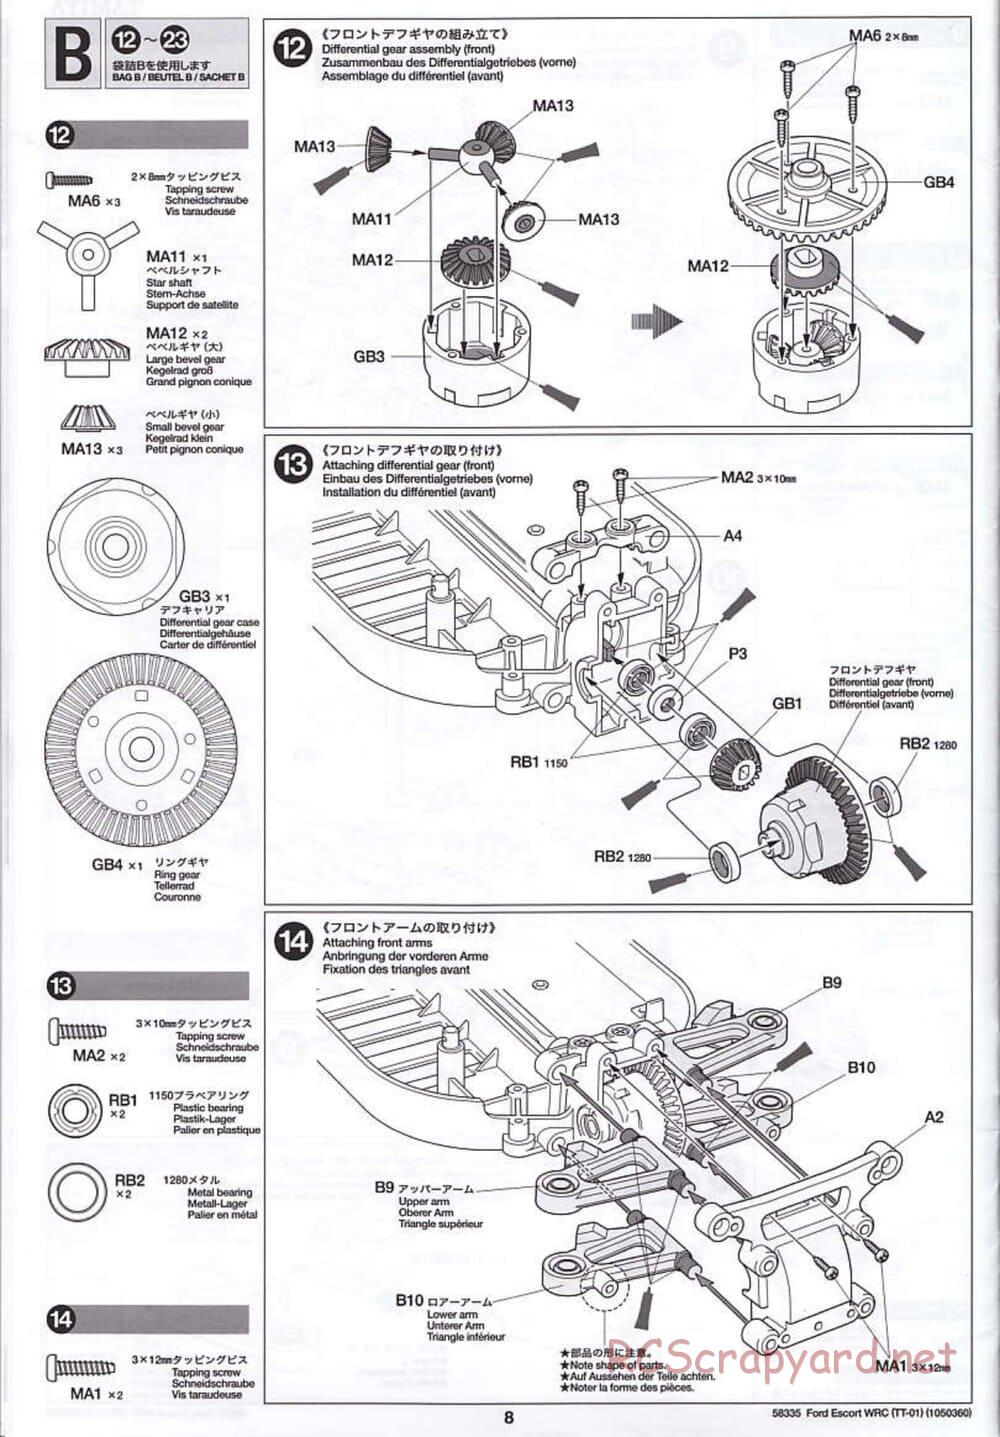 Tamiya - Ford Escort WRC - TT-01 Chassis - Manual - Page 8